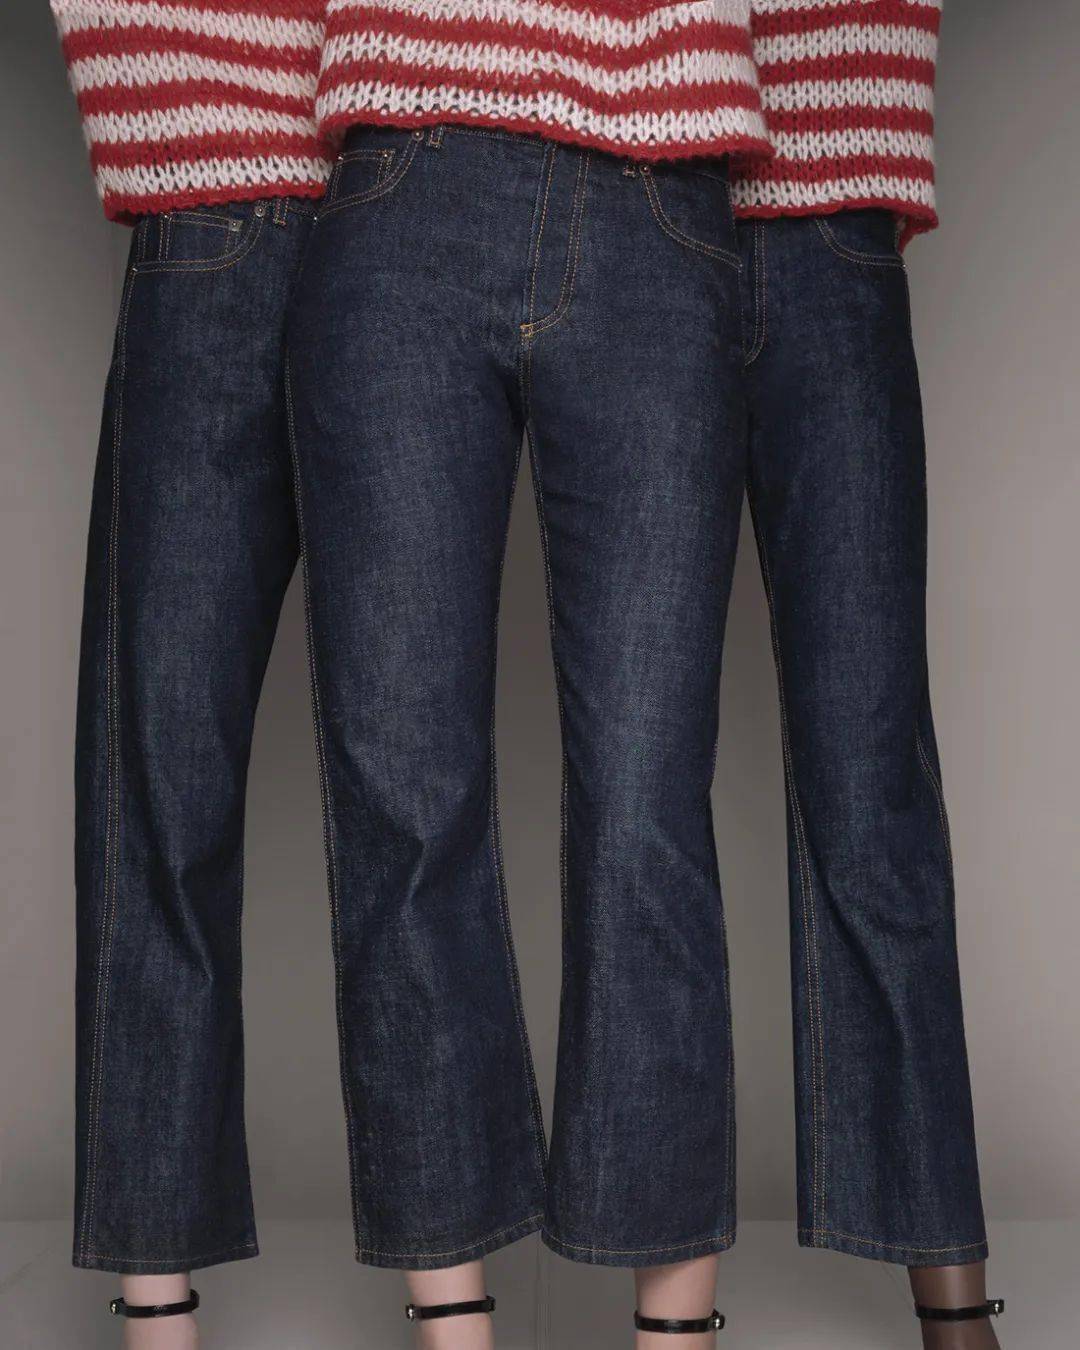 dior 8 牛仔裤系列 摩登造型 闲适优雅